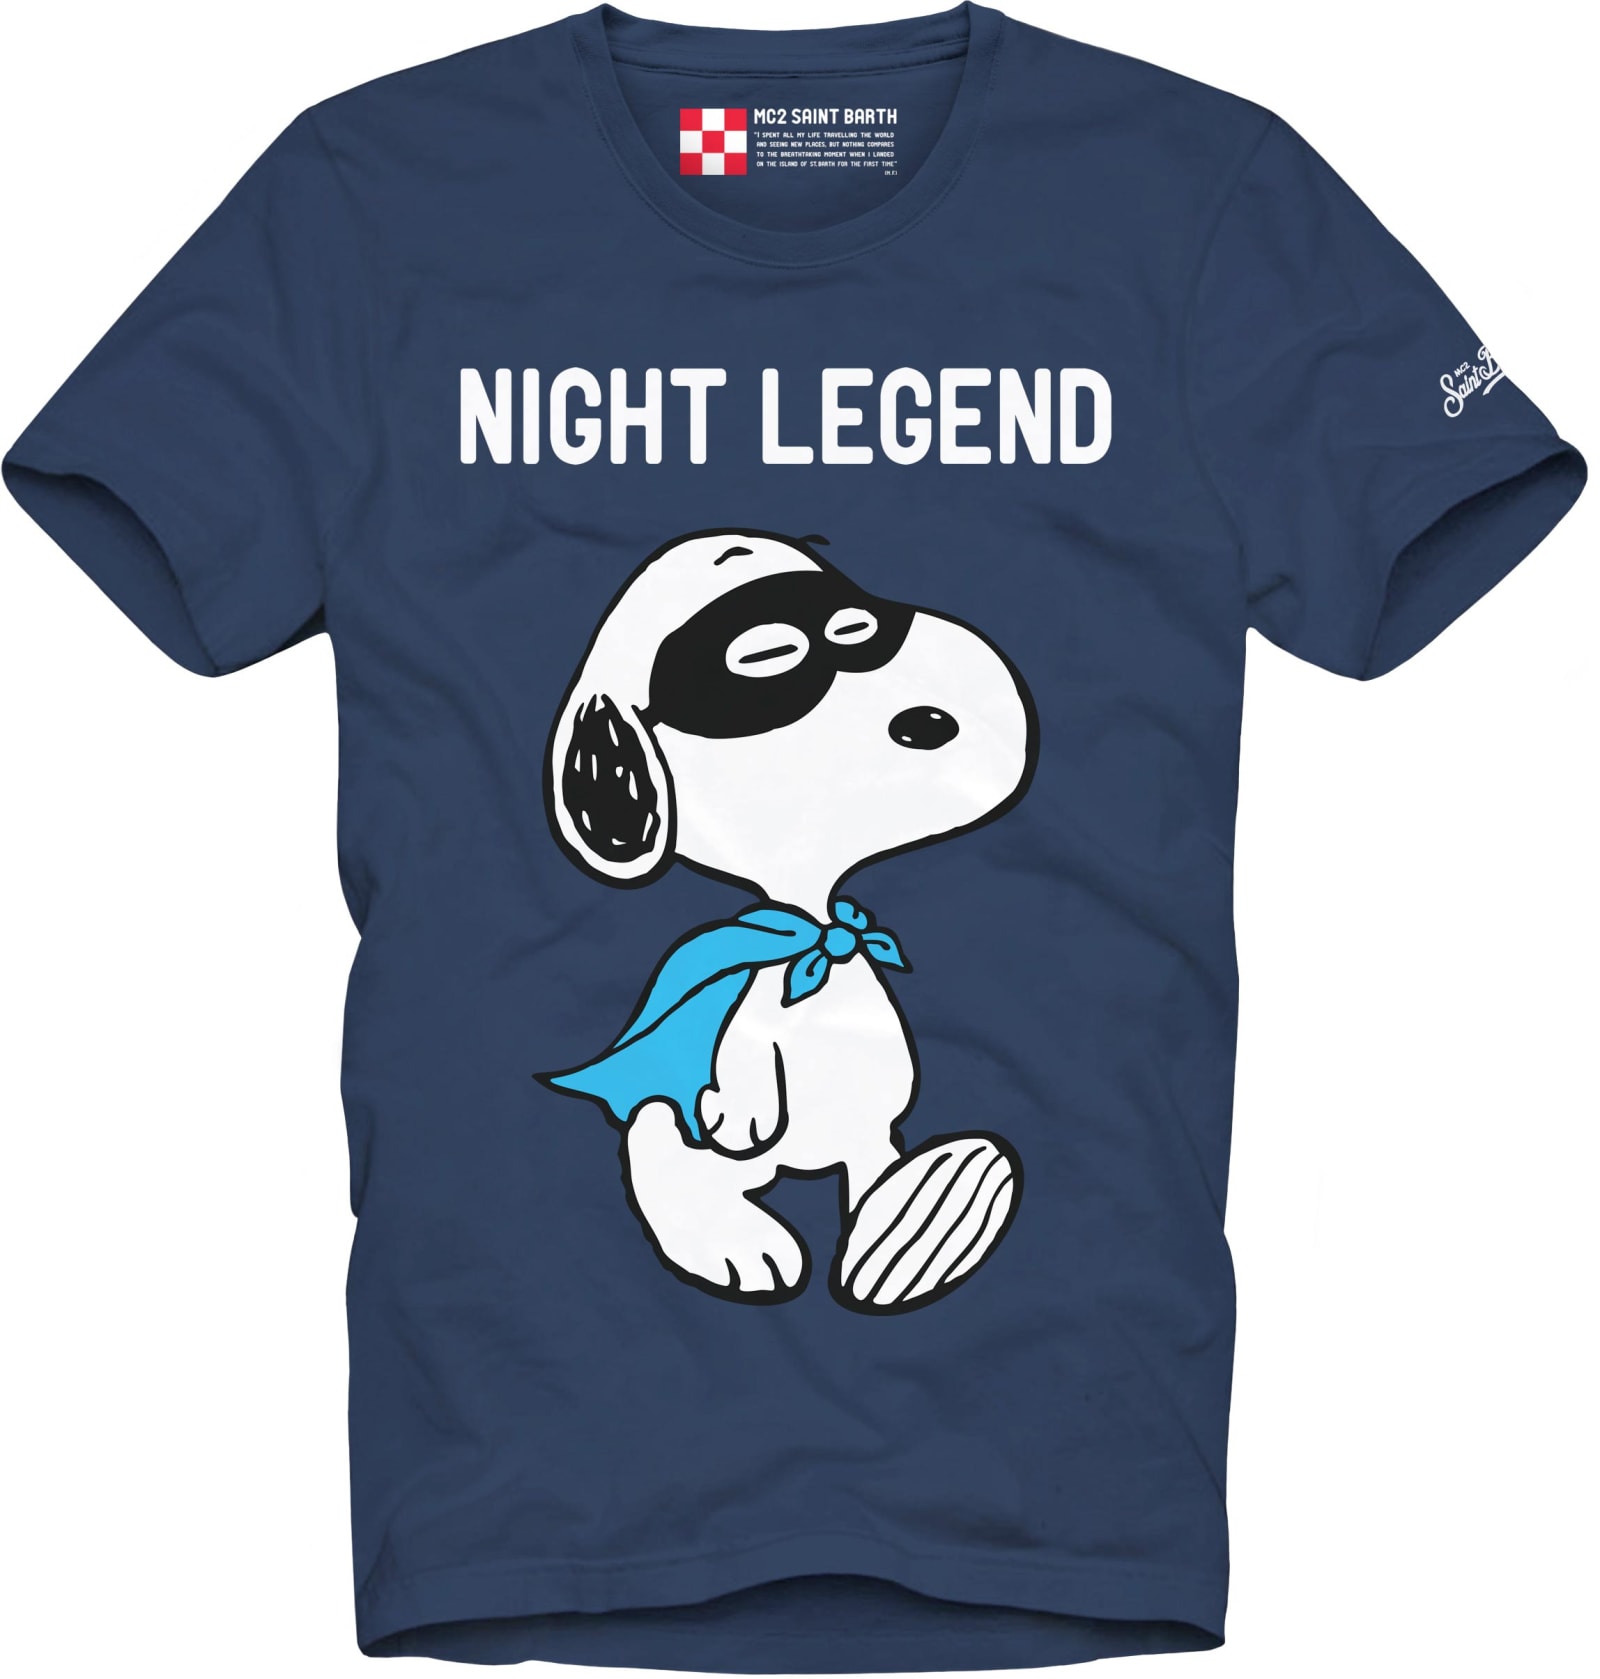 MC2 Saint Barth Night Legend Printed Blue Navy T-shirt - Peanuts Special Edition ®